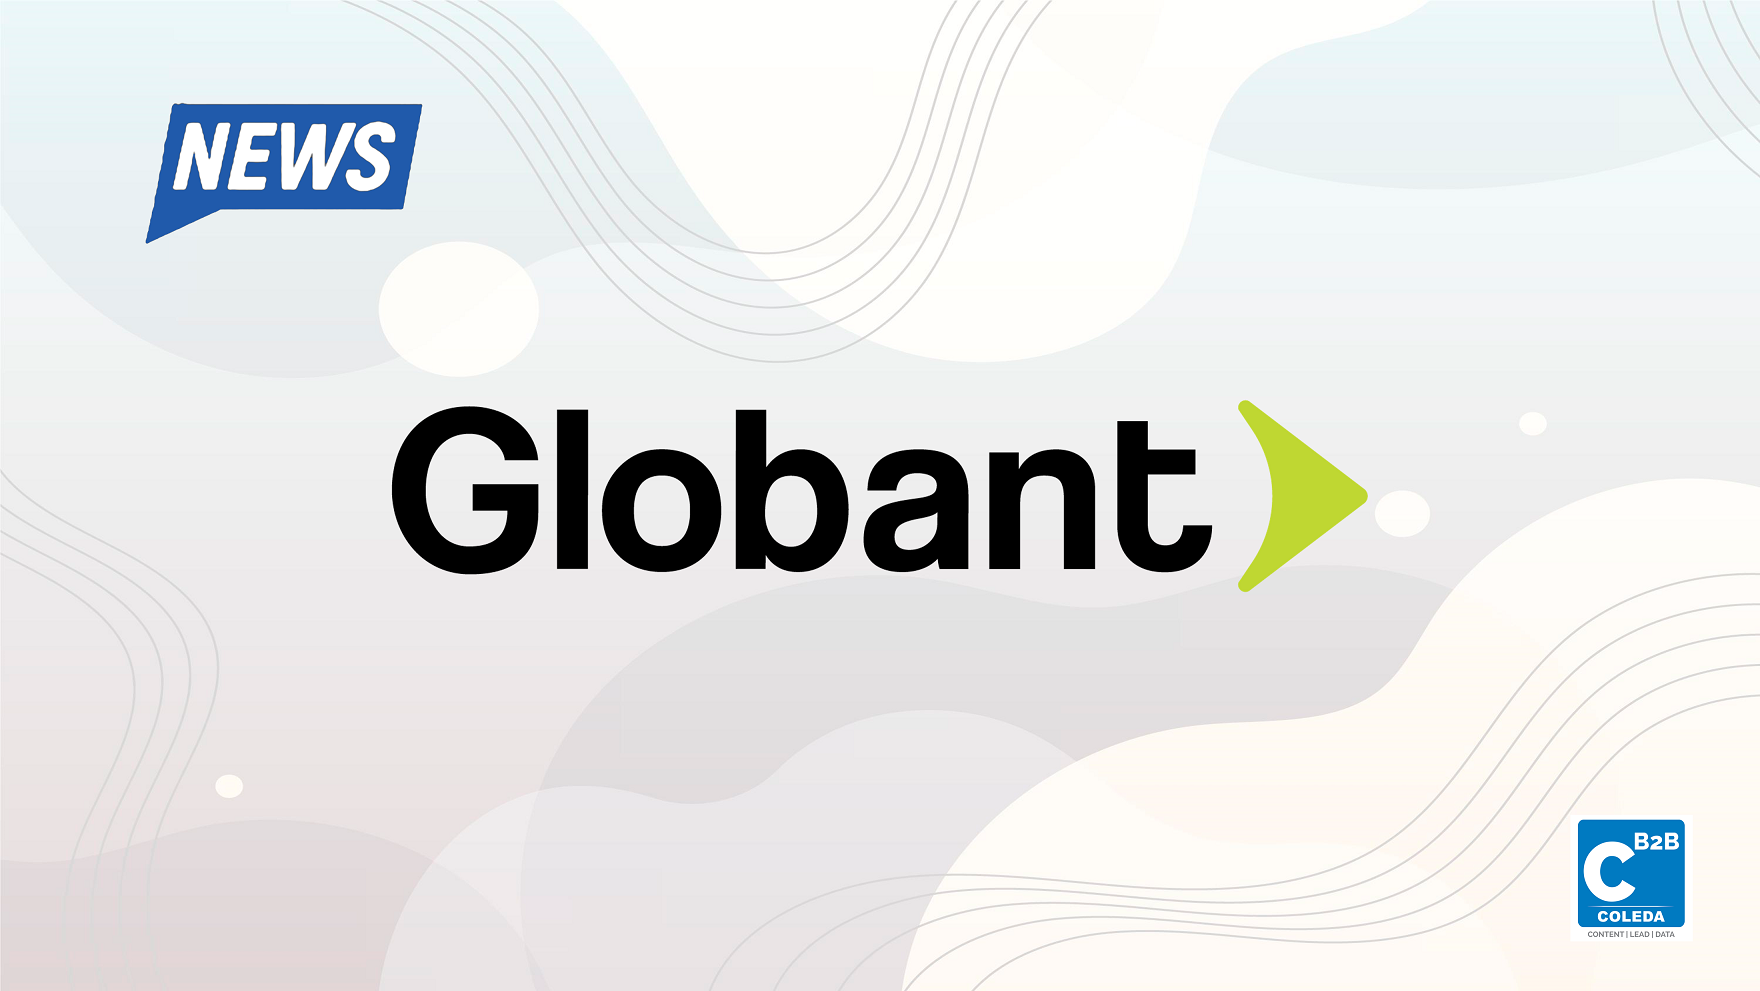 Globant Establishes a New Dedicated Google Cloud Studio